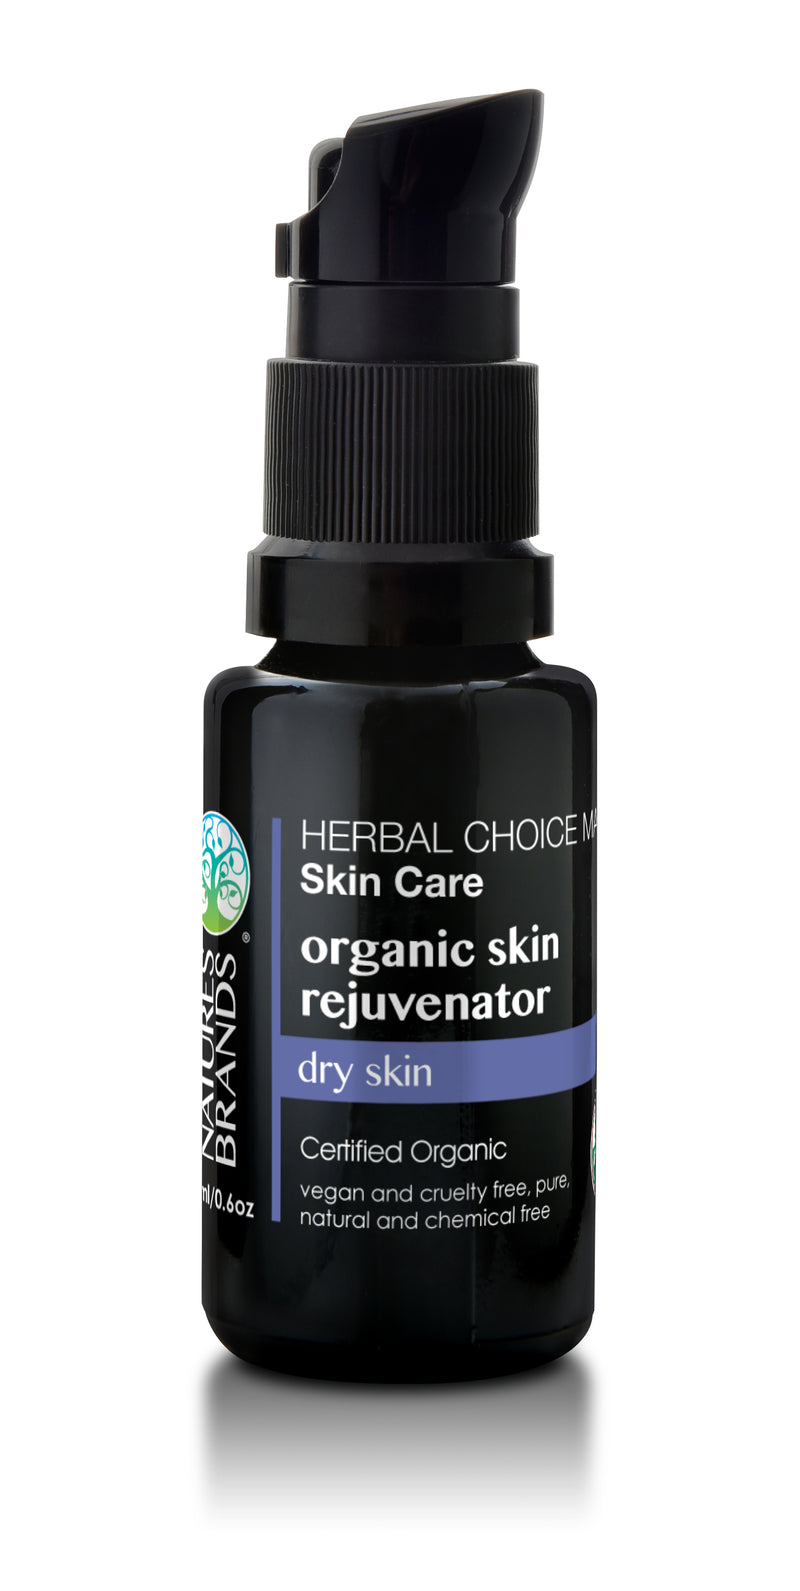 Herbal Choice Mari Organic Skin Rejuvenator - Herbal Choice Mari Organic Skin Rejuvenator - Herbal Choice Mari Organic Skin Rejuvenator